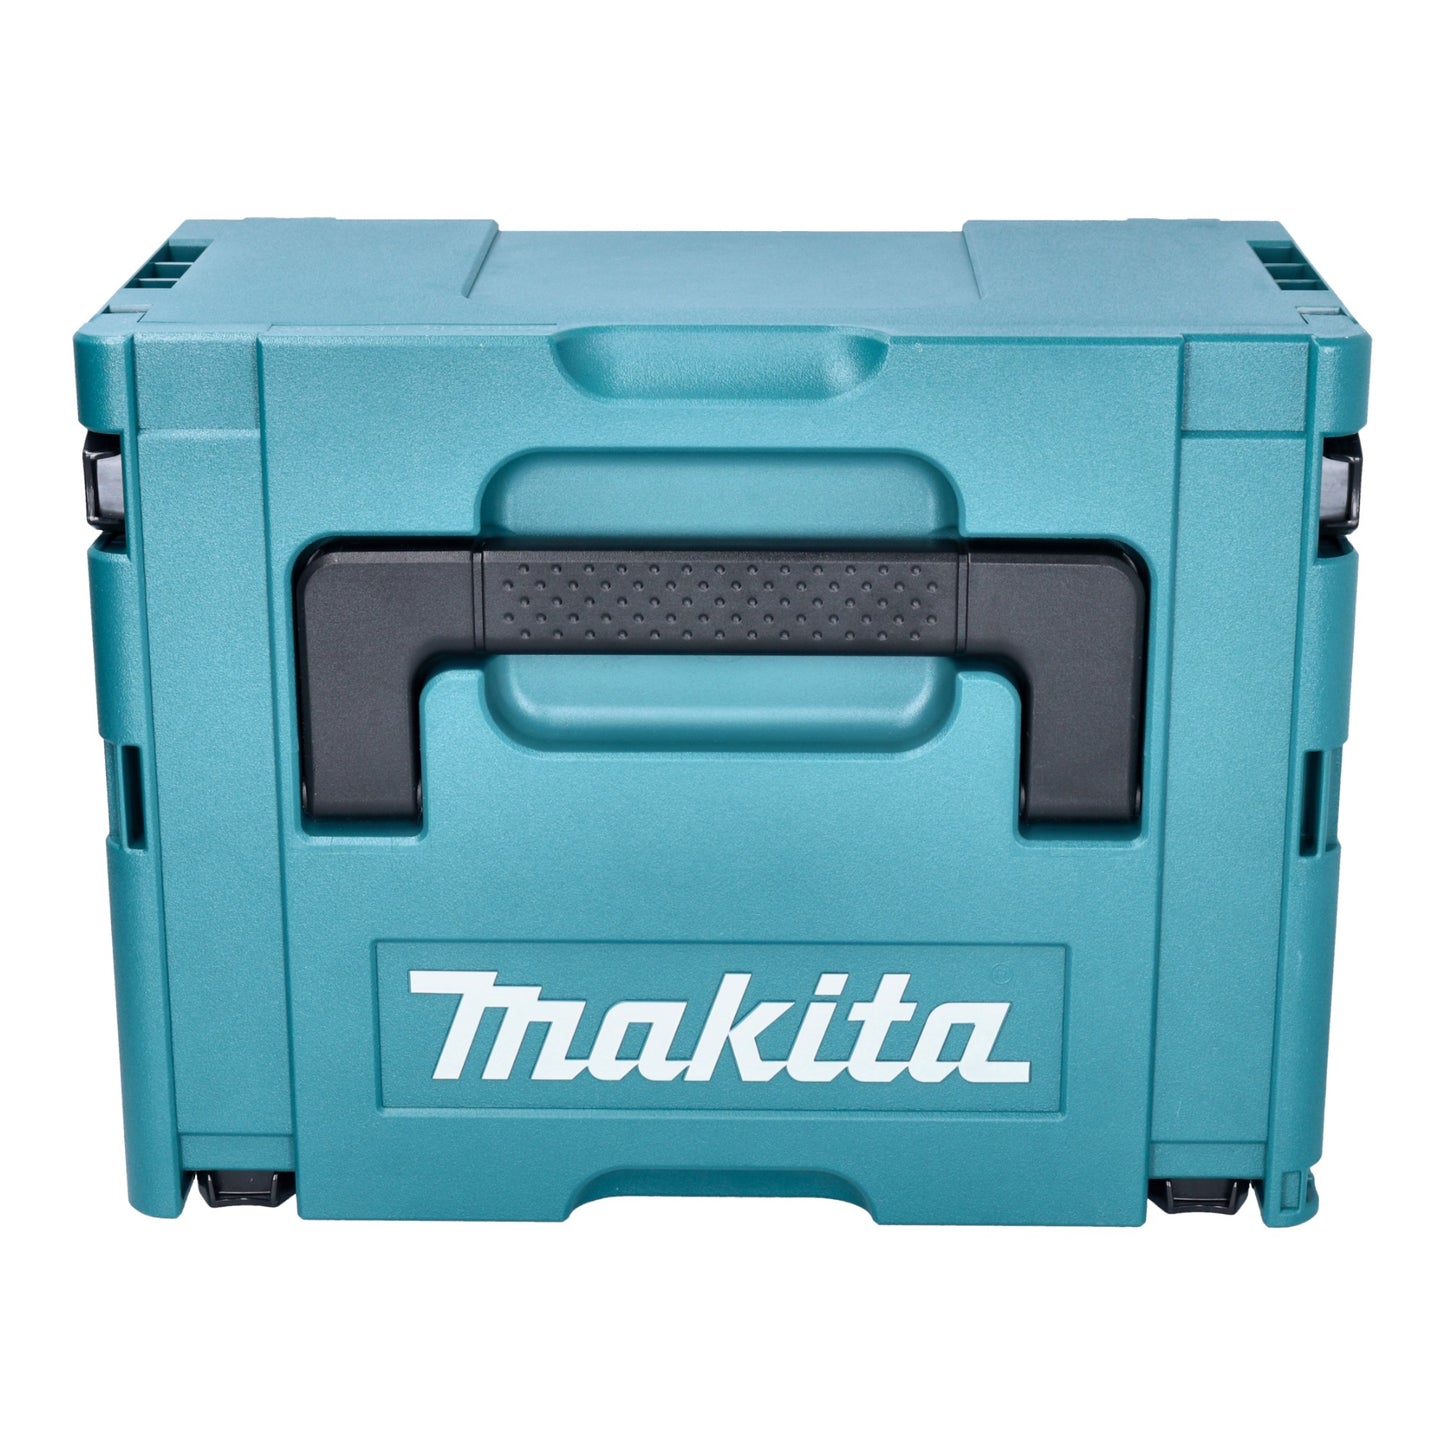 Makita BO 6030 JX Exzenterschleifer 310 Watt 150 mm + Schleifpapier + Makpac